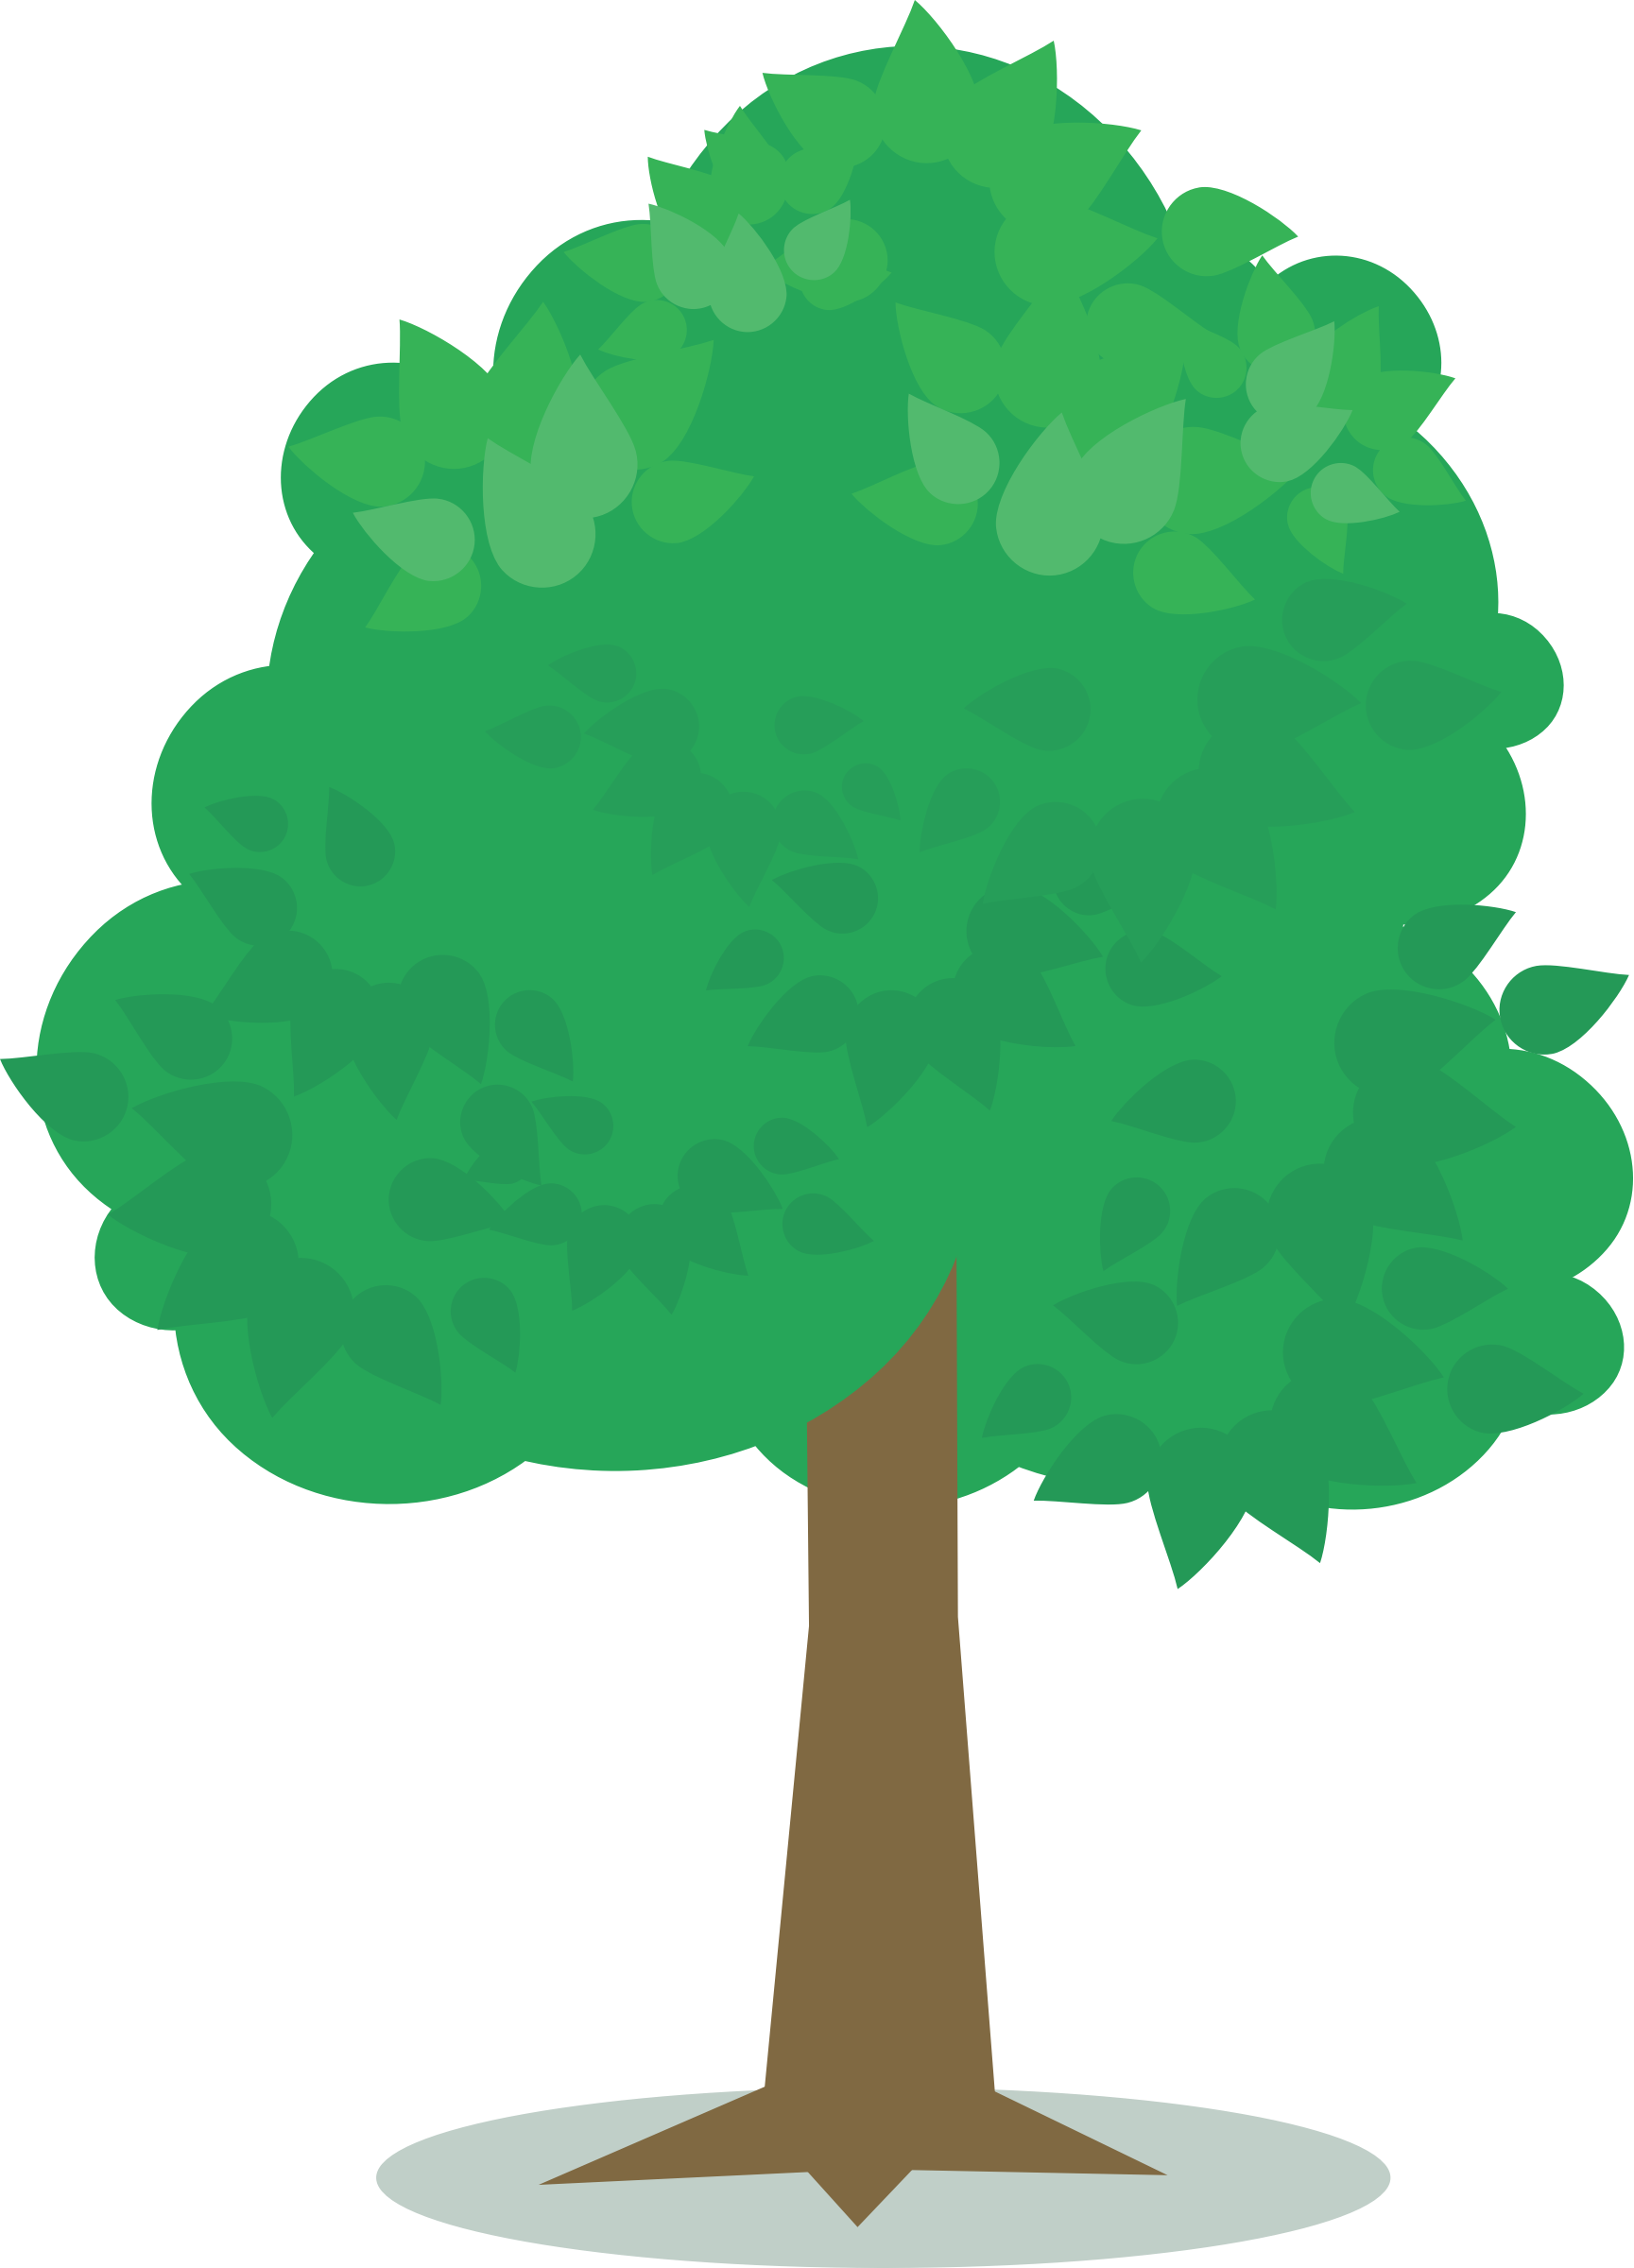 clover clipart tree